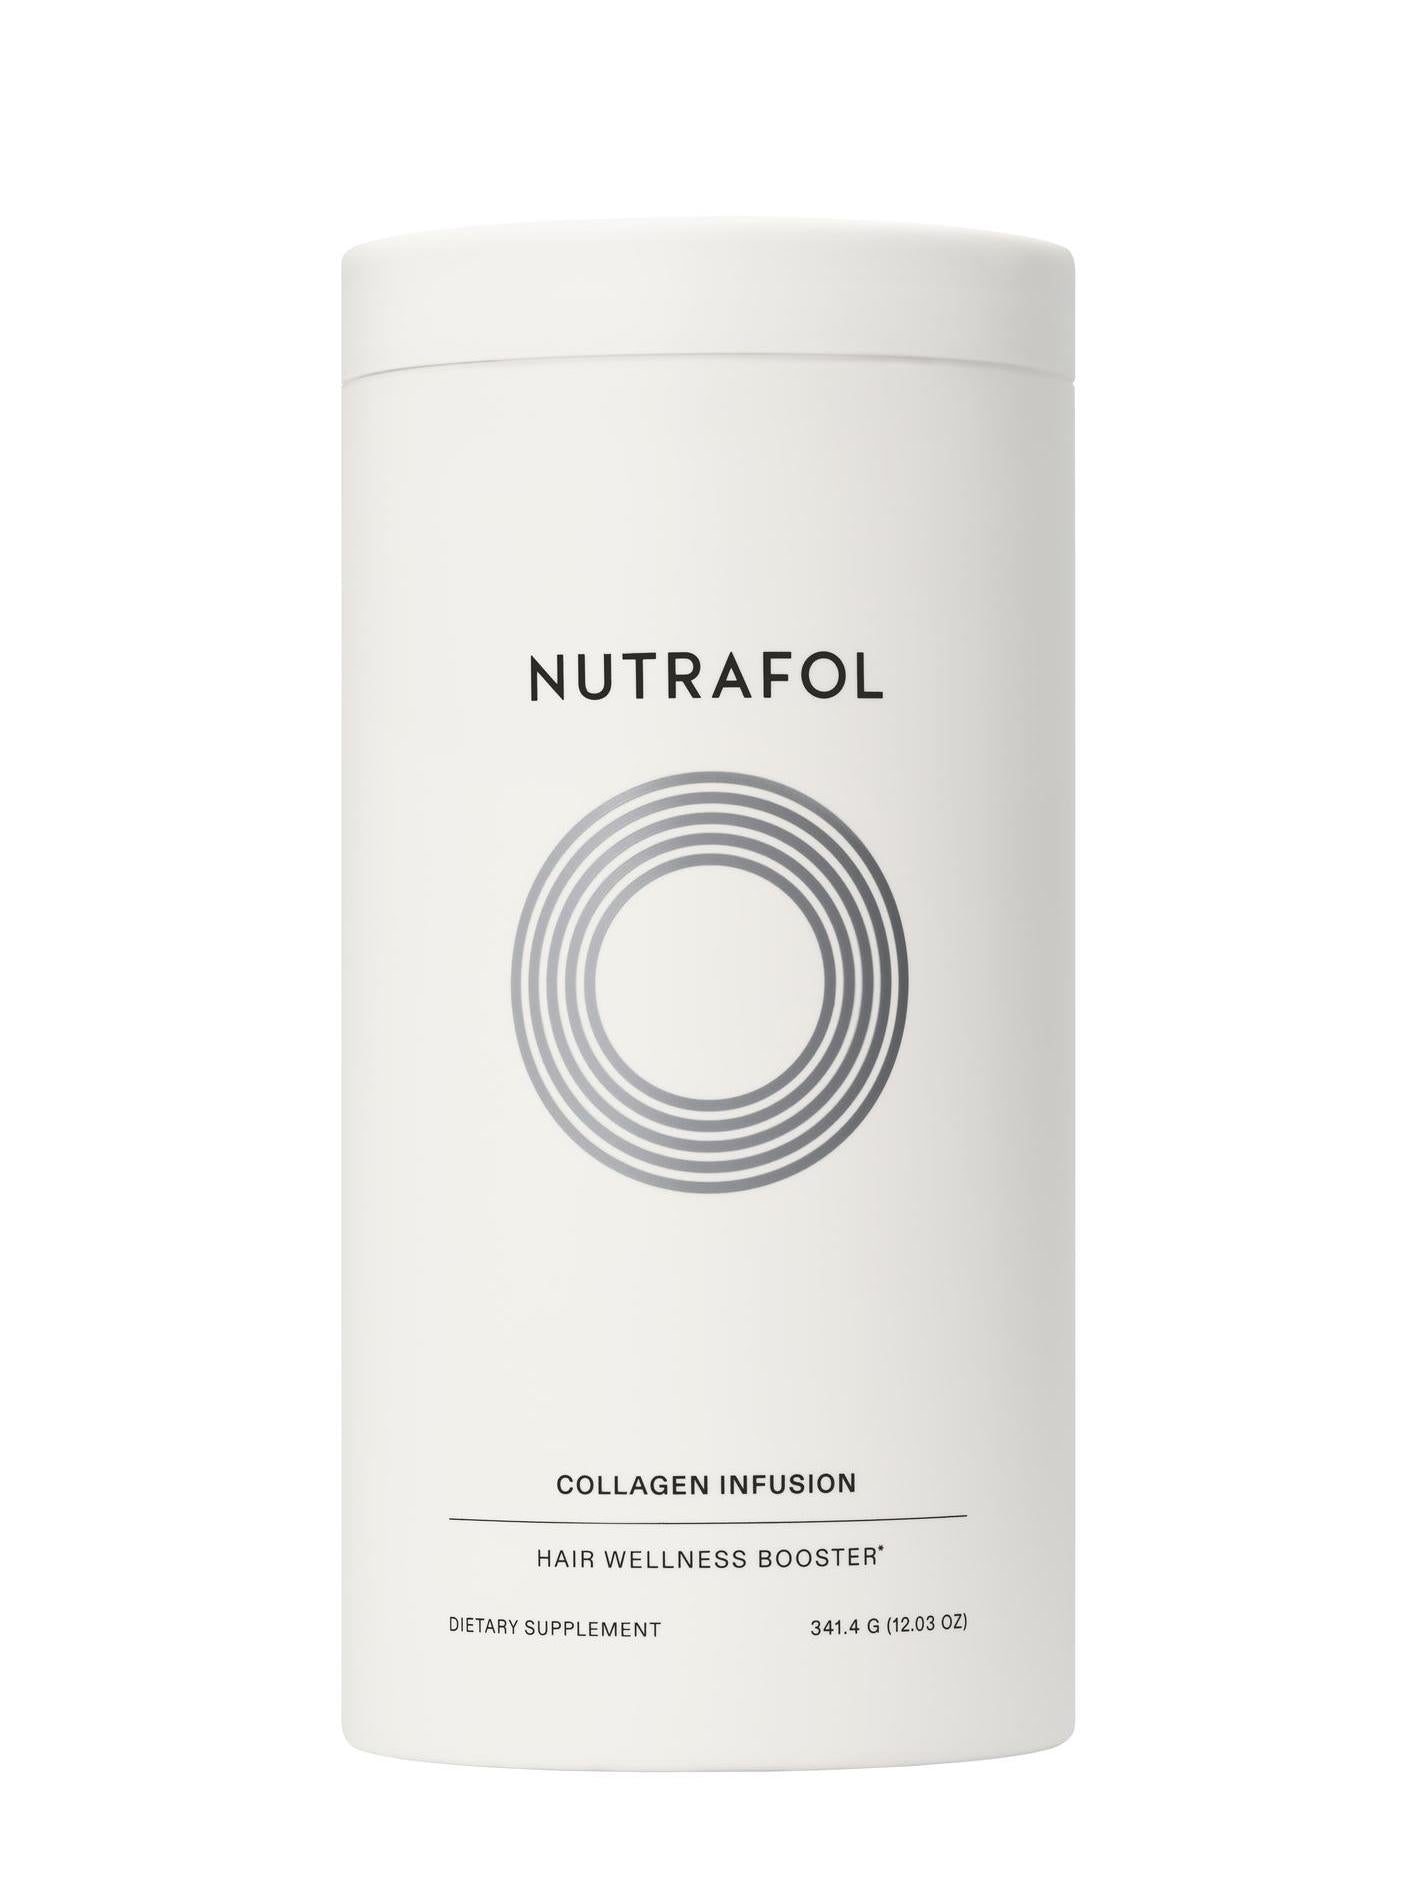 Nutrafol Collagen Infusion Hair Wellness Booster Dietary Supplement (12.03 oz)